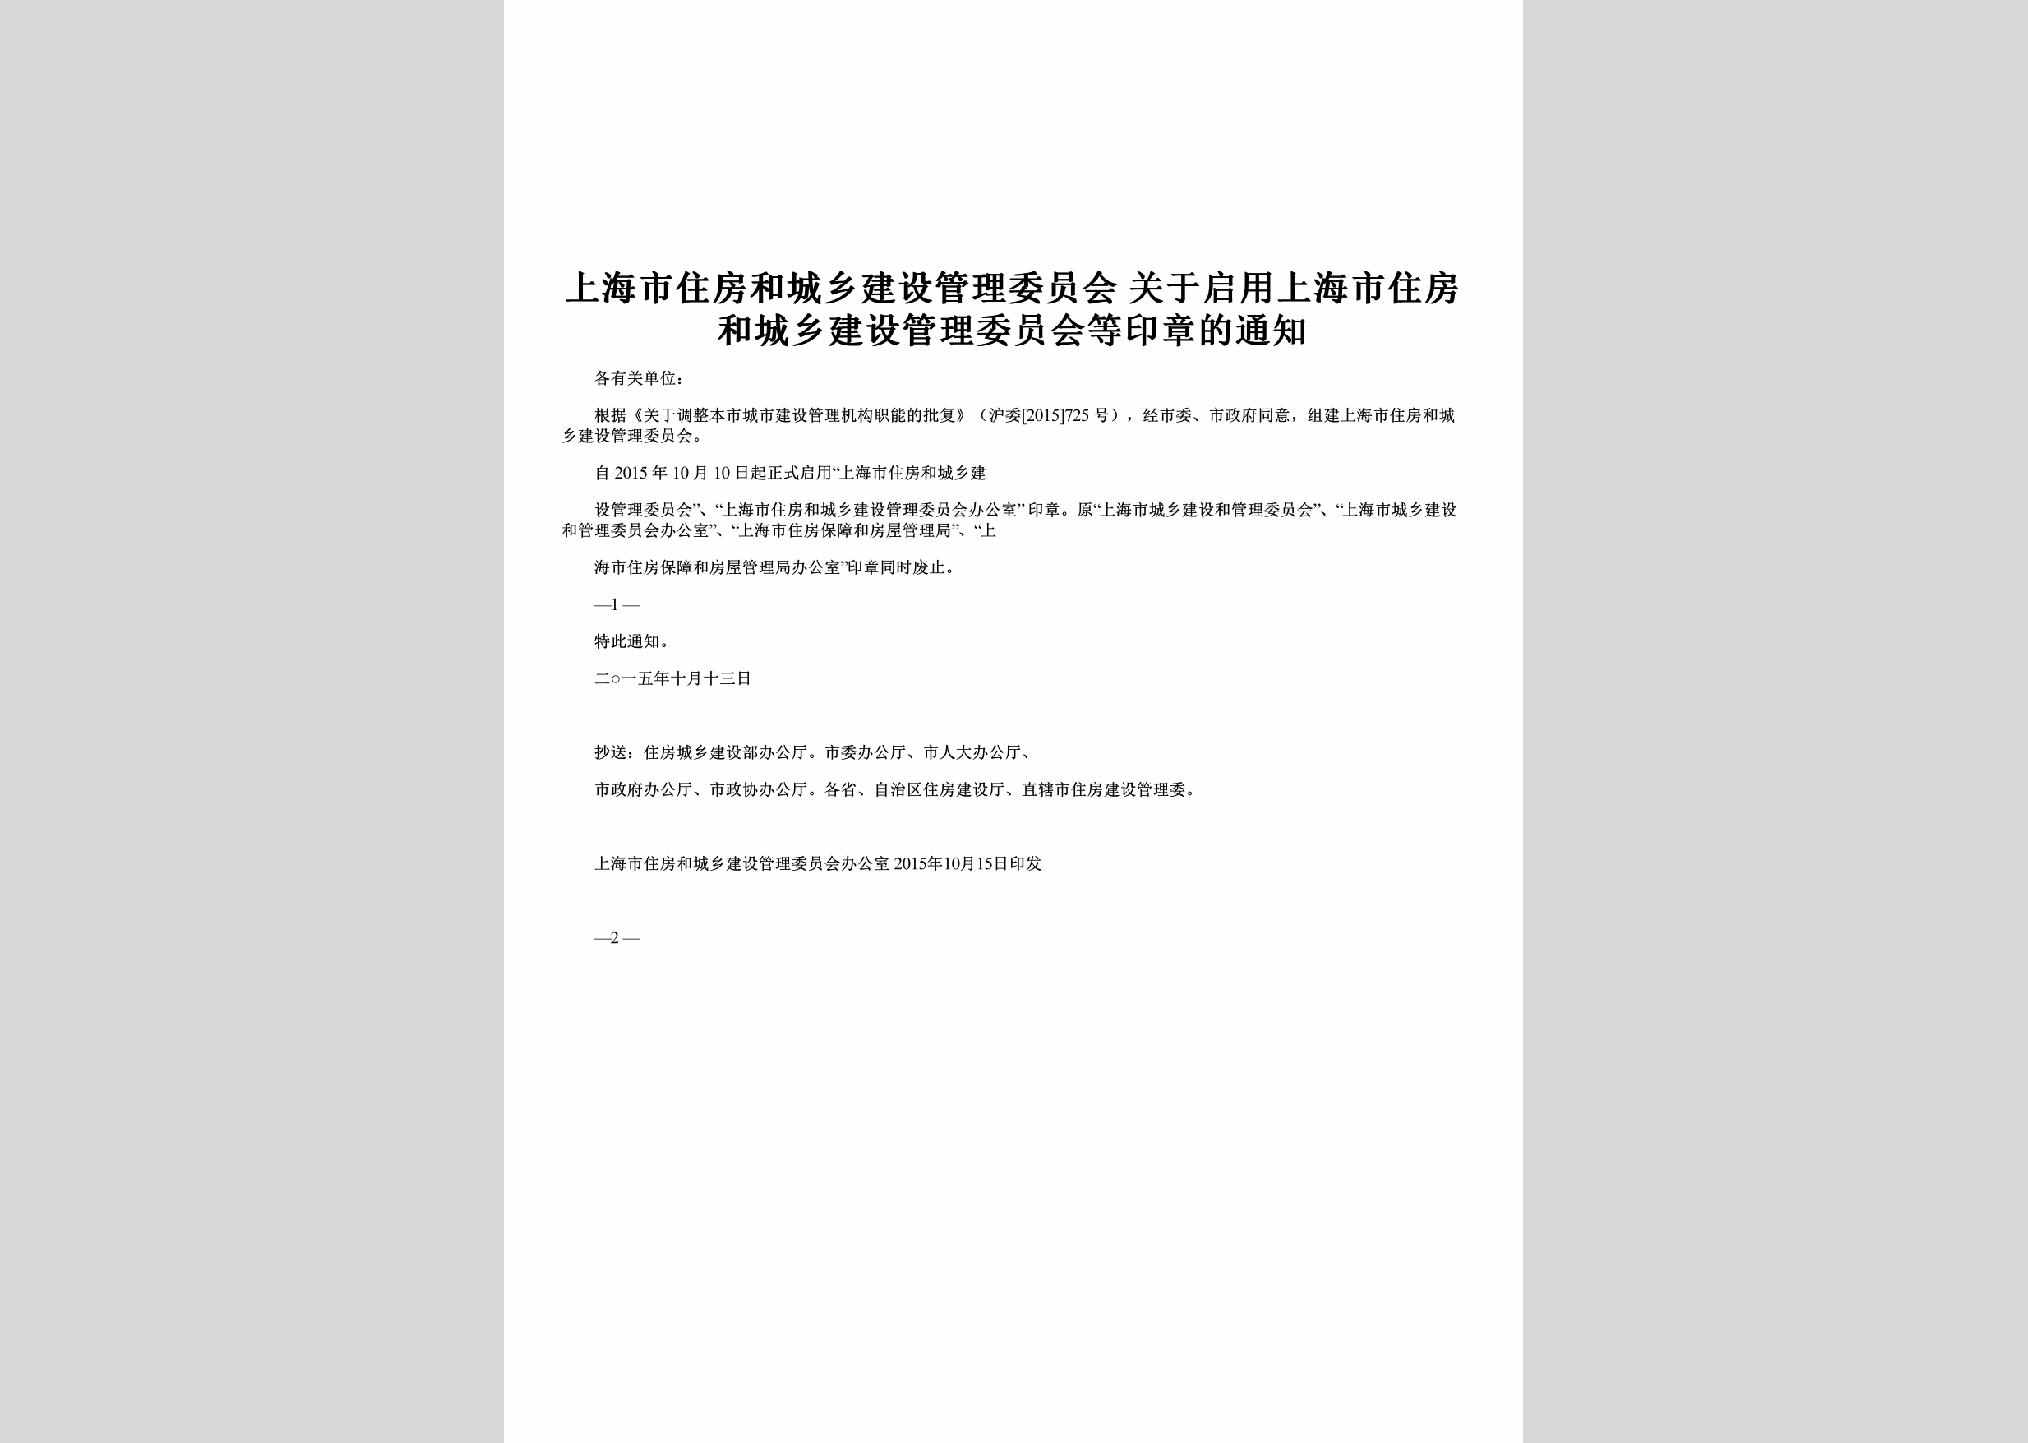 SH-QYGLYZTZ-2015：关于启用上海市住房和城乡建设管理委员会等印章的通知